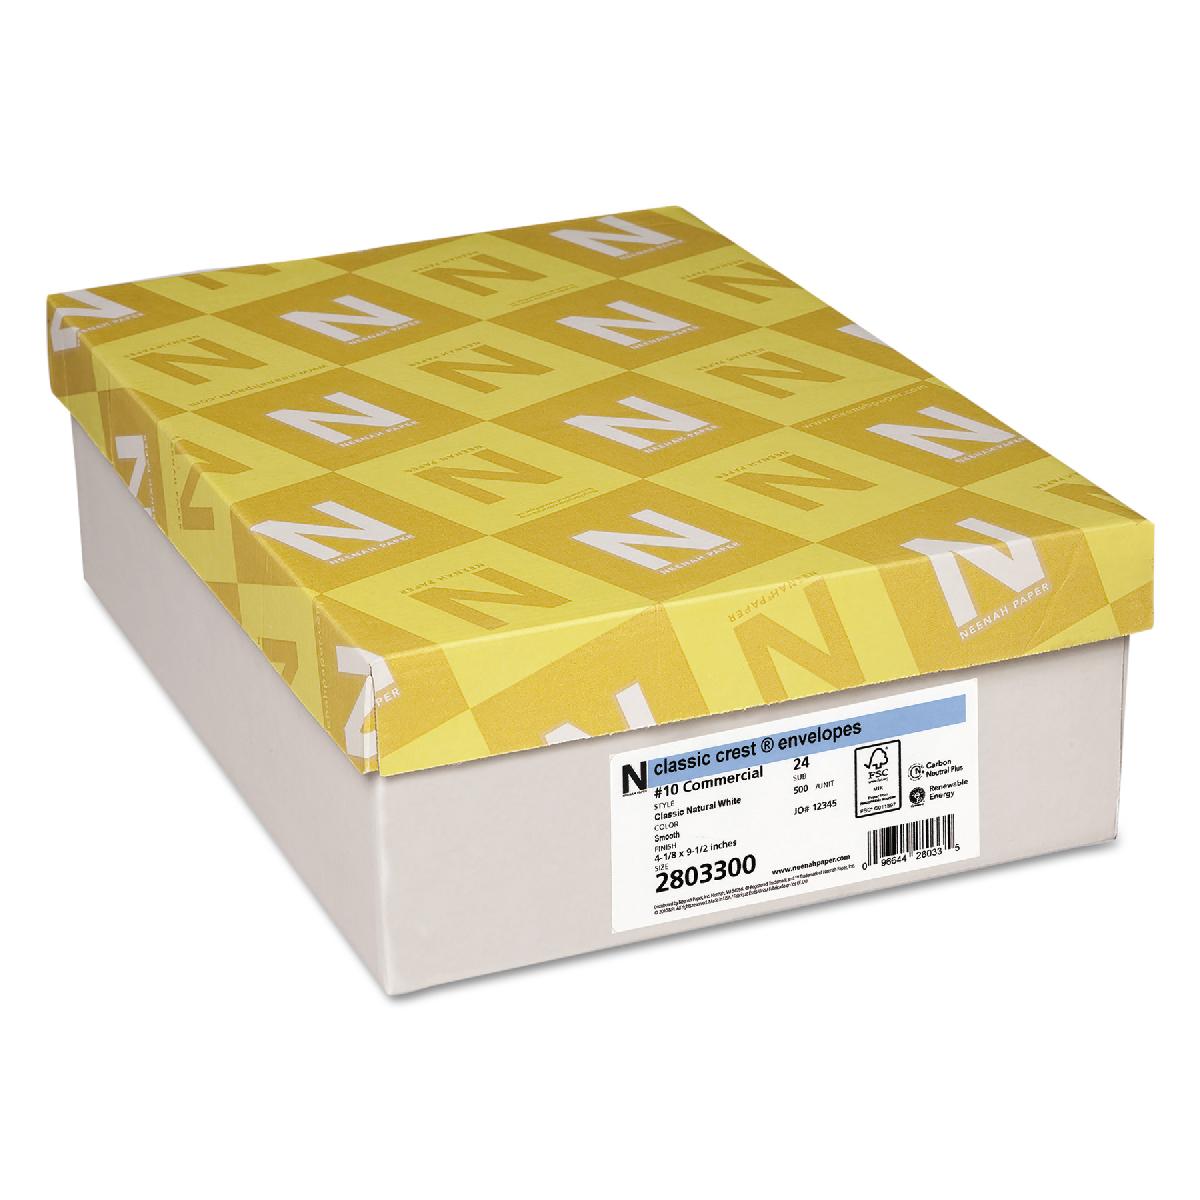 Neenah Paper® Classic Crest Whitestone 24 lb. Writing No. 10 Commercial Envelopes 500 Box